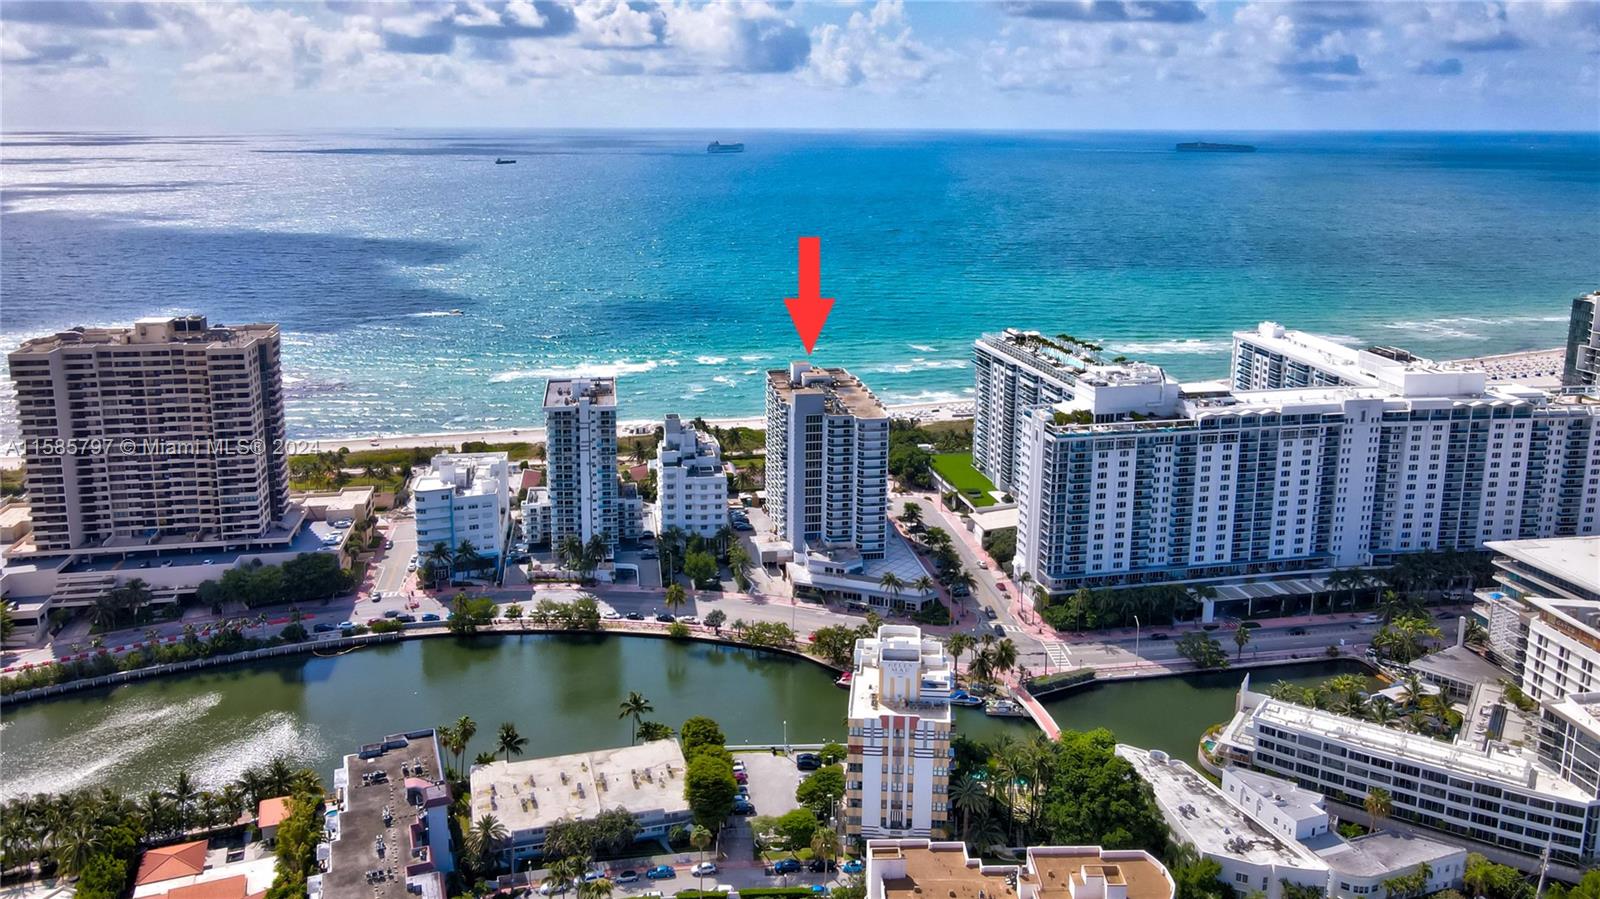 Rental Property at 2401 Collins Ave 904, Miami Beach, Miami-Dade County, Florida - Bedrooms: 2 
Bathrooms: 2  - $4,500 MO.